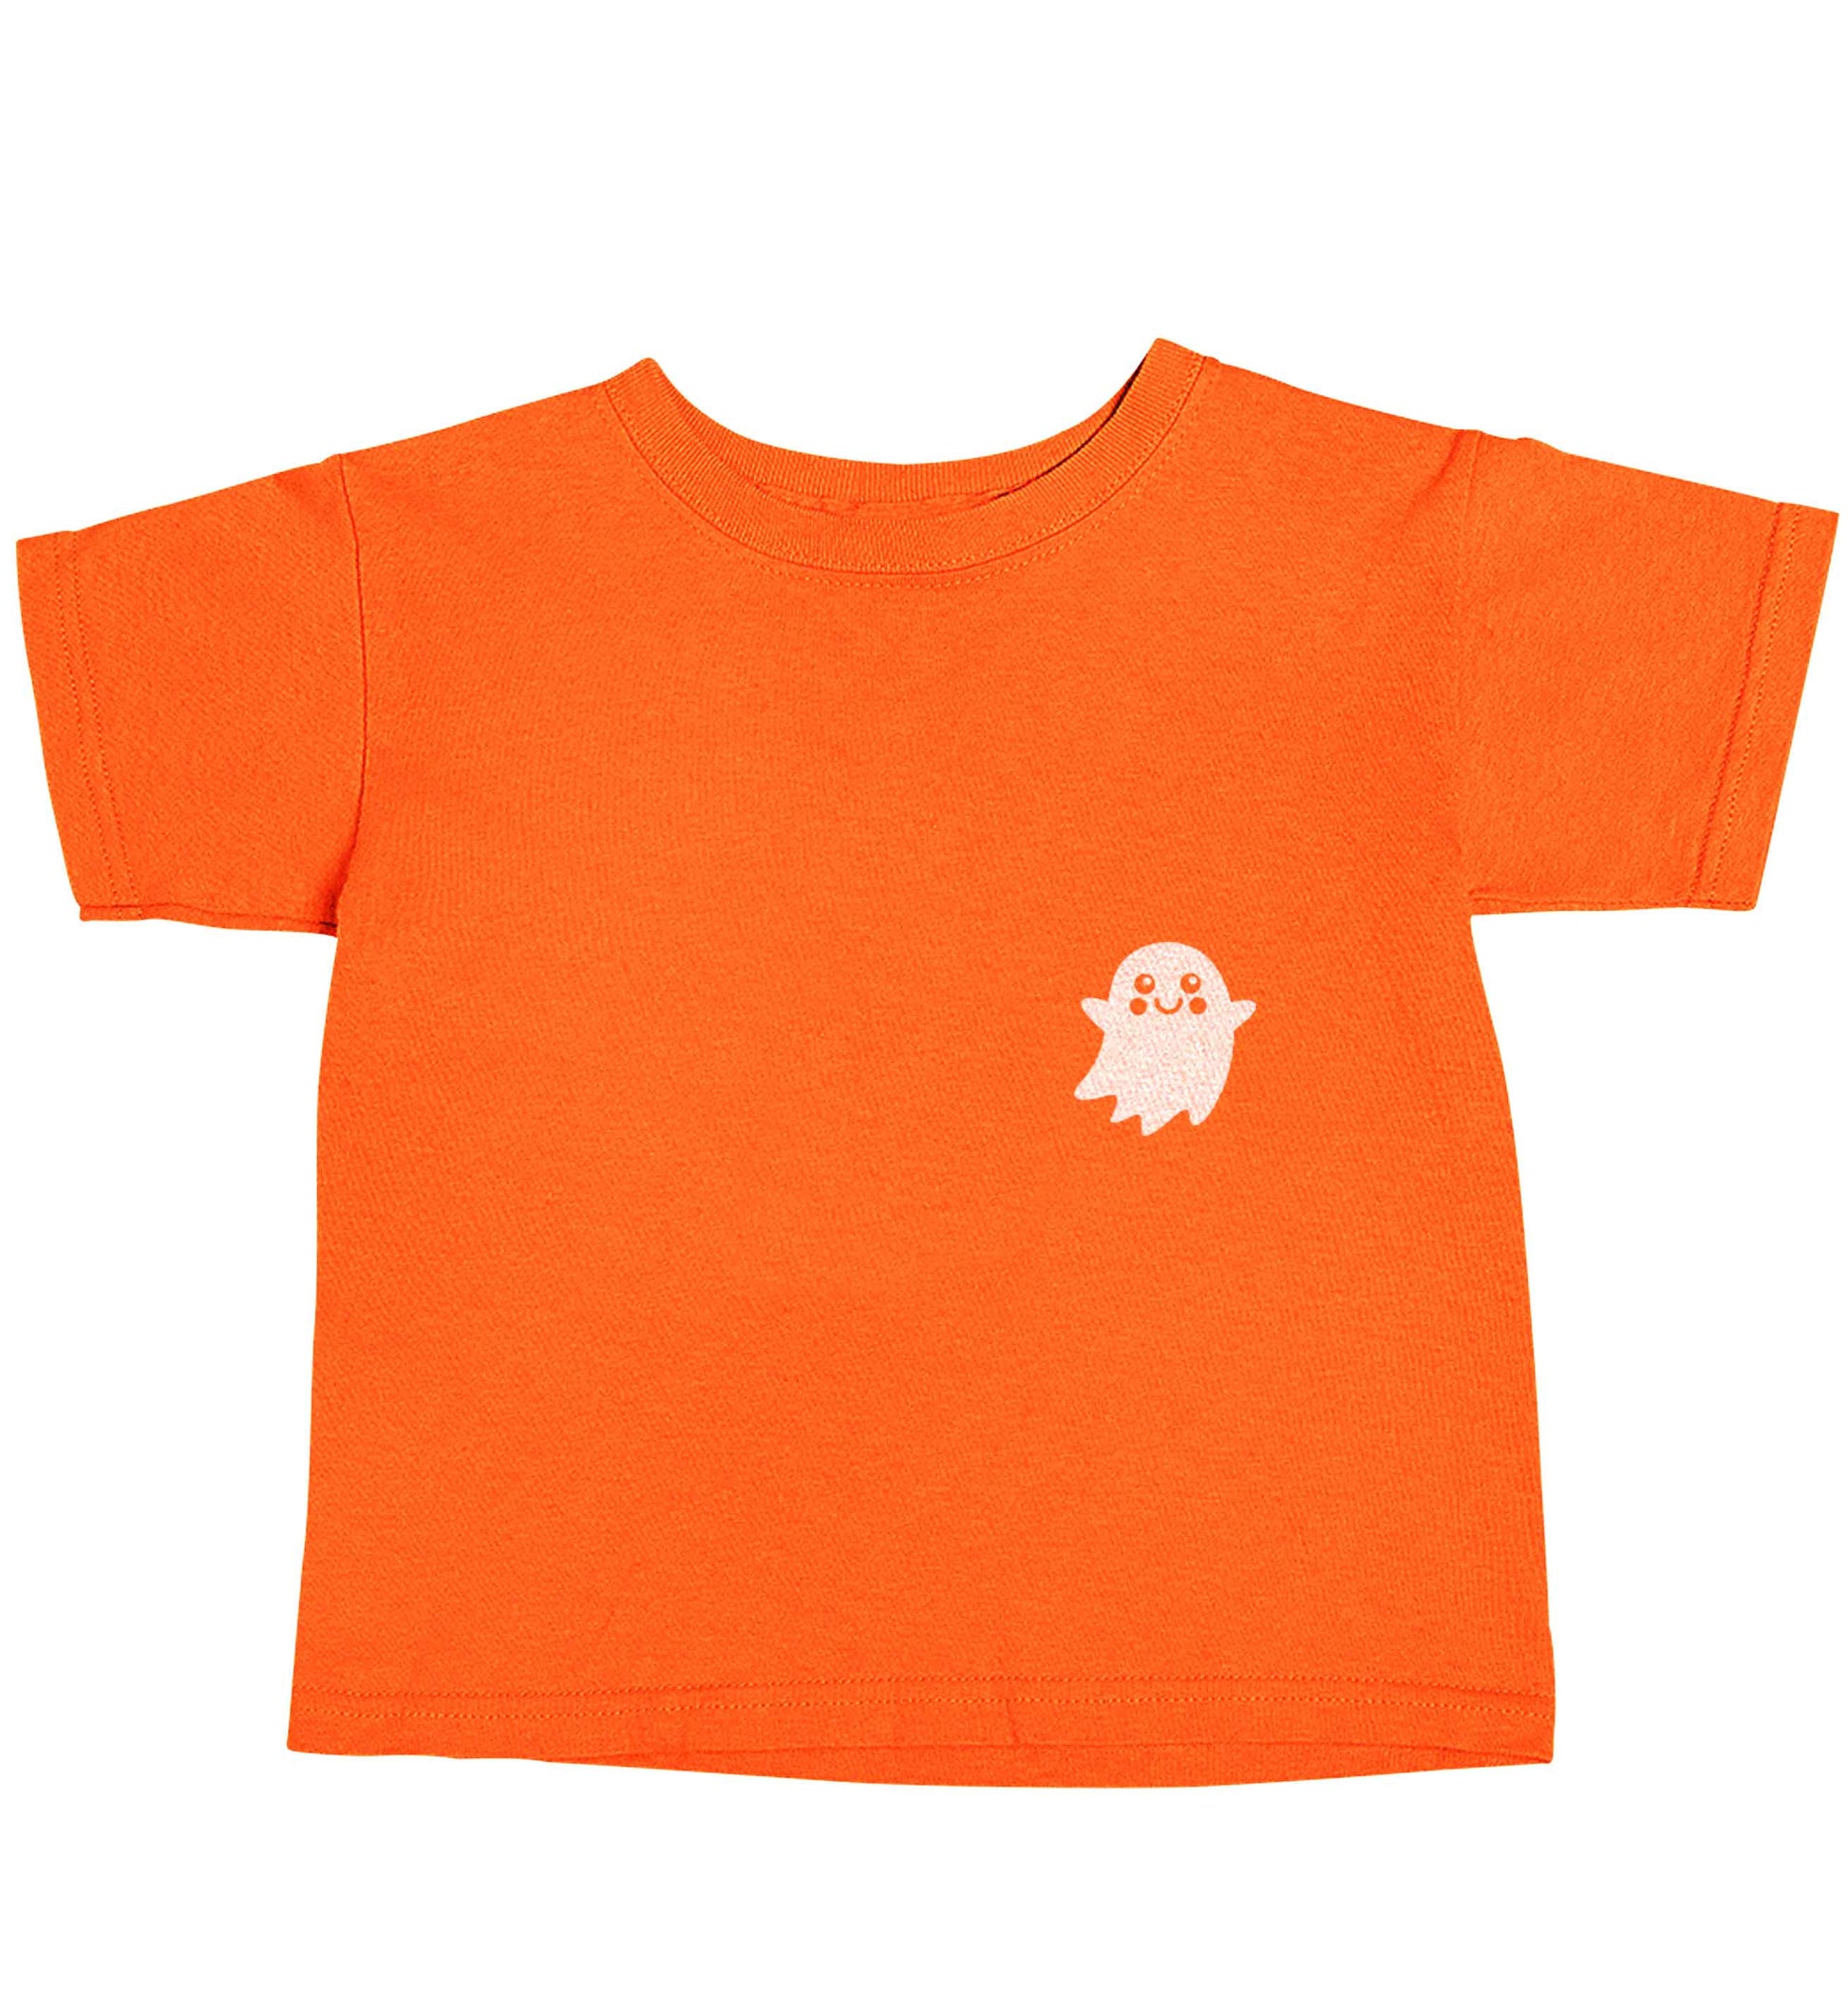 Pocket ghost orange baby toddler Tshirt 2 Years